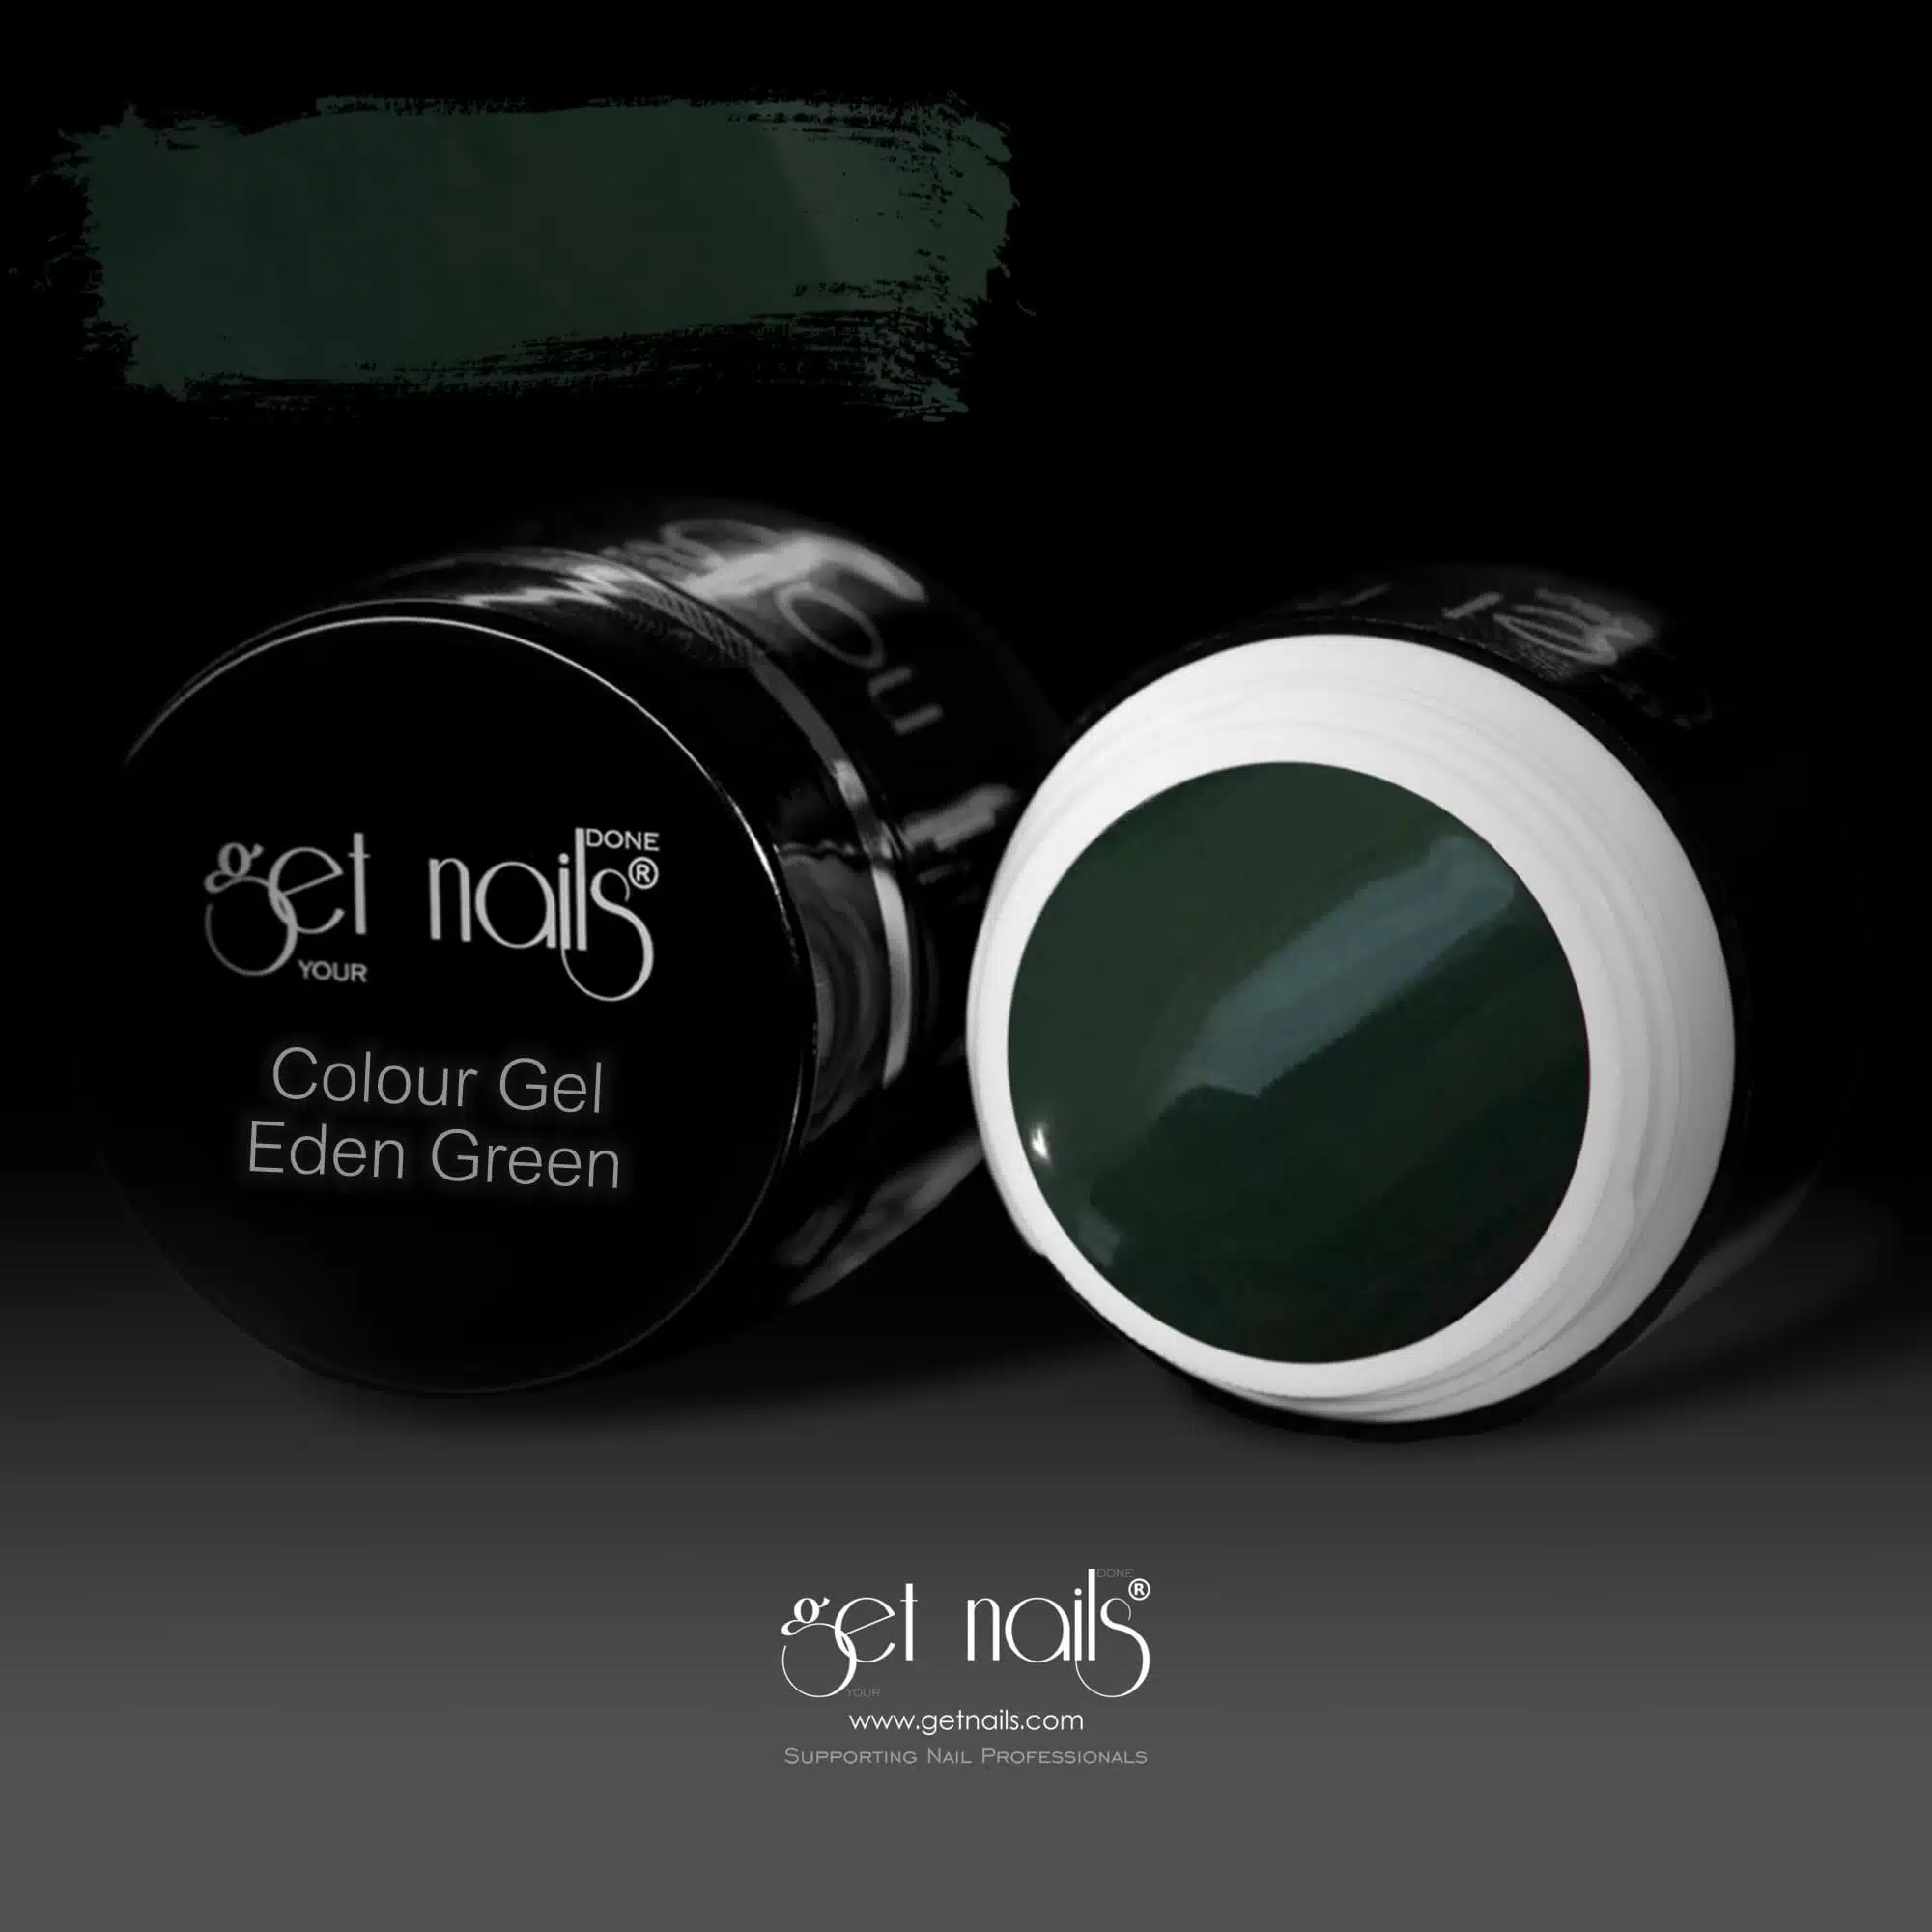 Get Nails Austria - Colour Gel Eden Green 5g